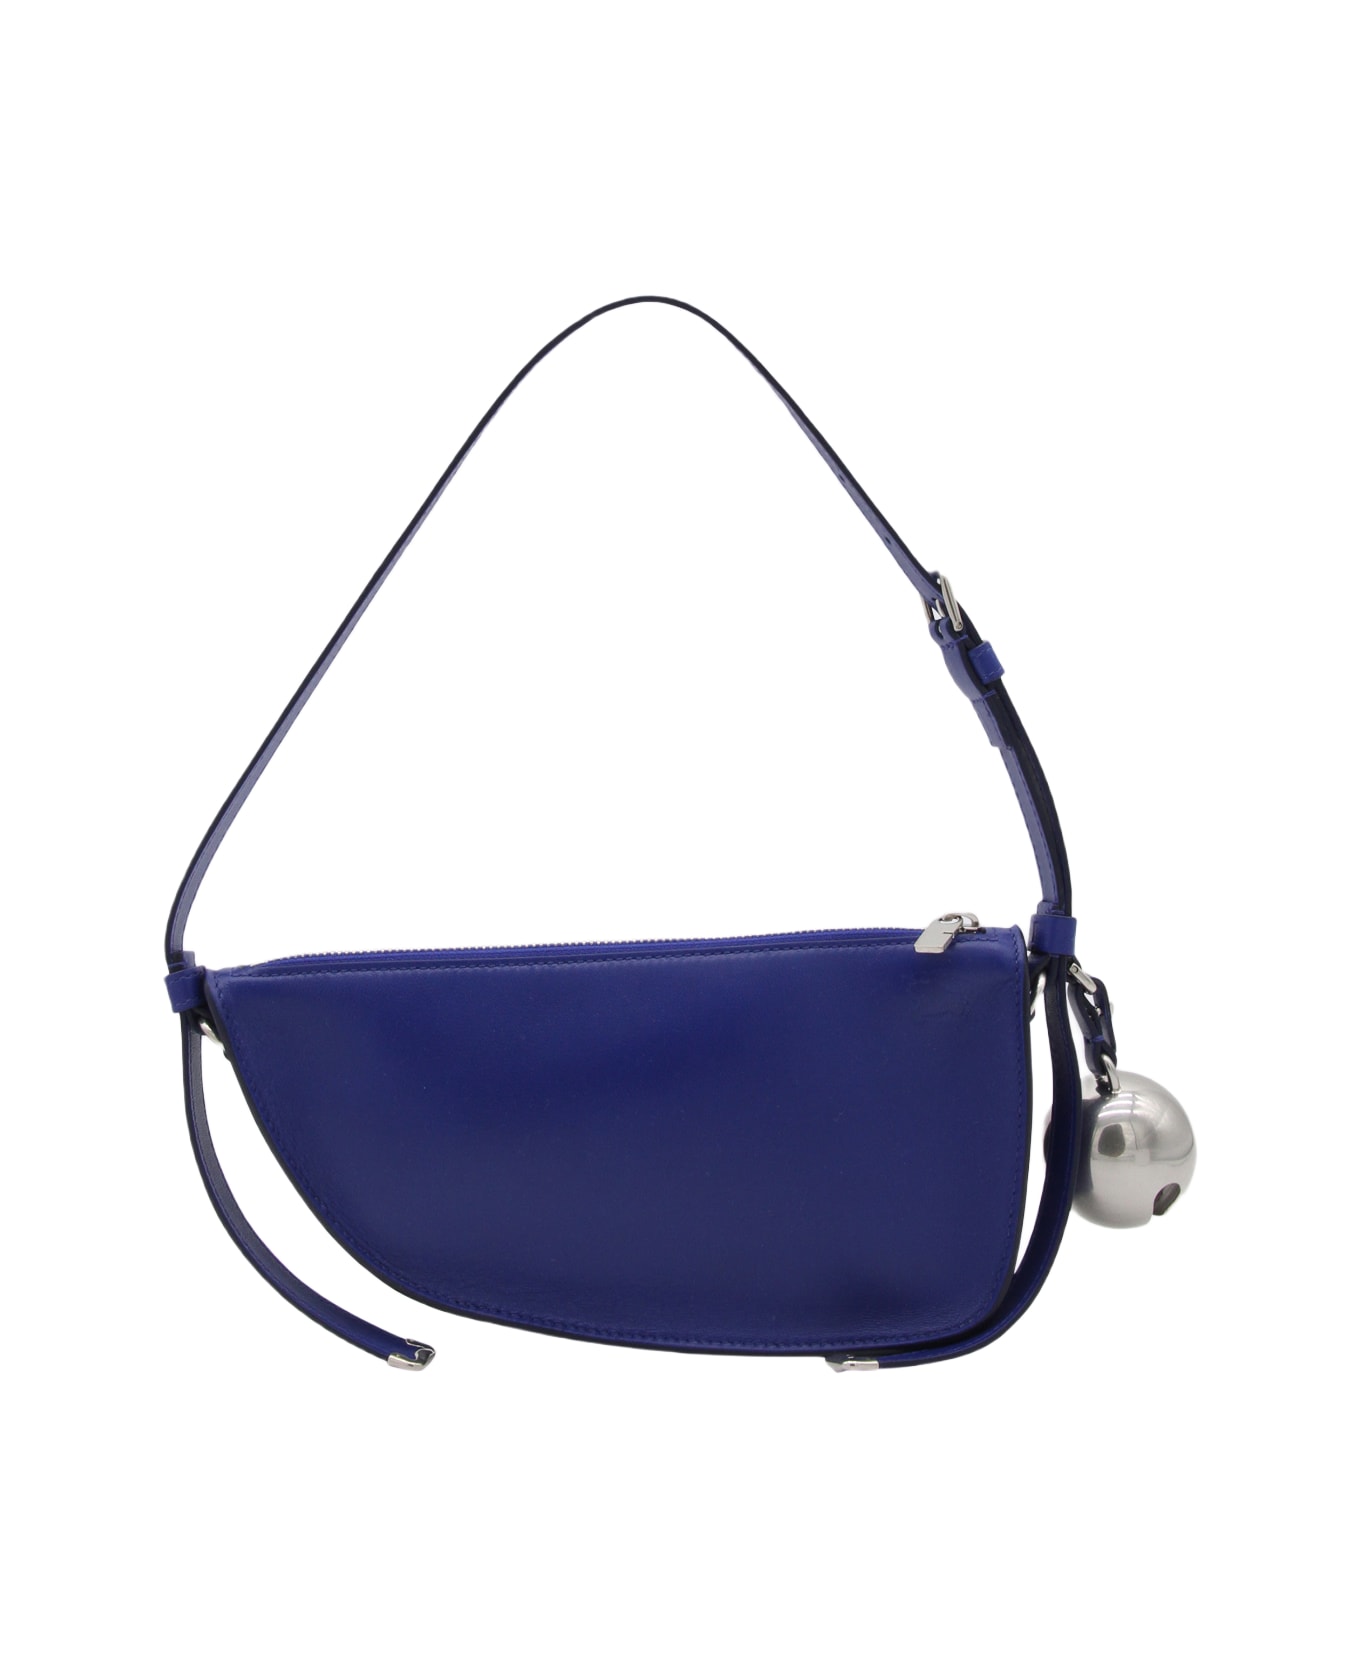 Burberry Dark Blue Shield Leather Shoulder Bag - KNIGHT